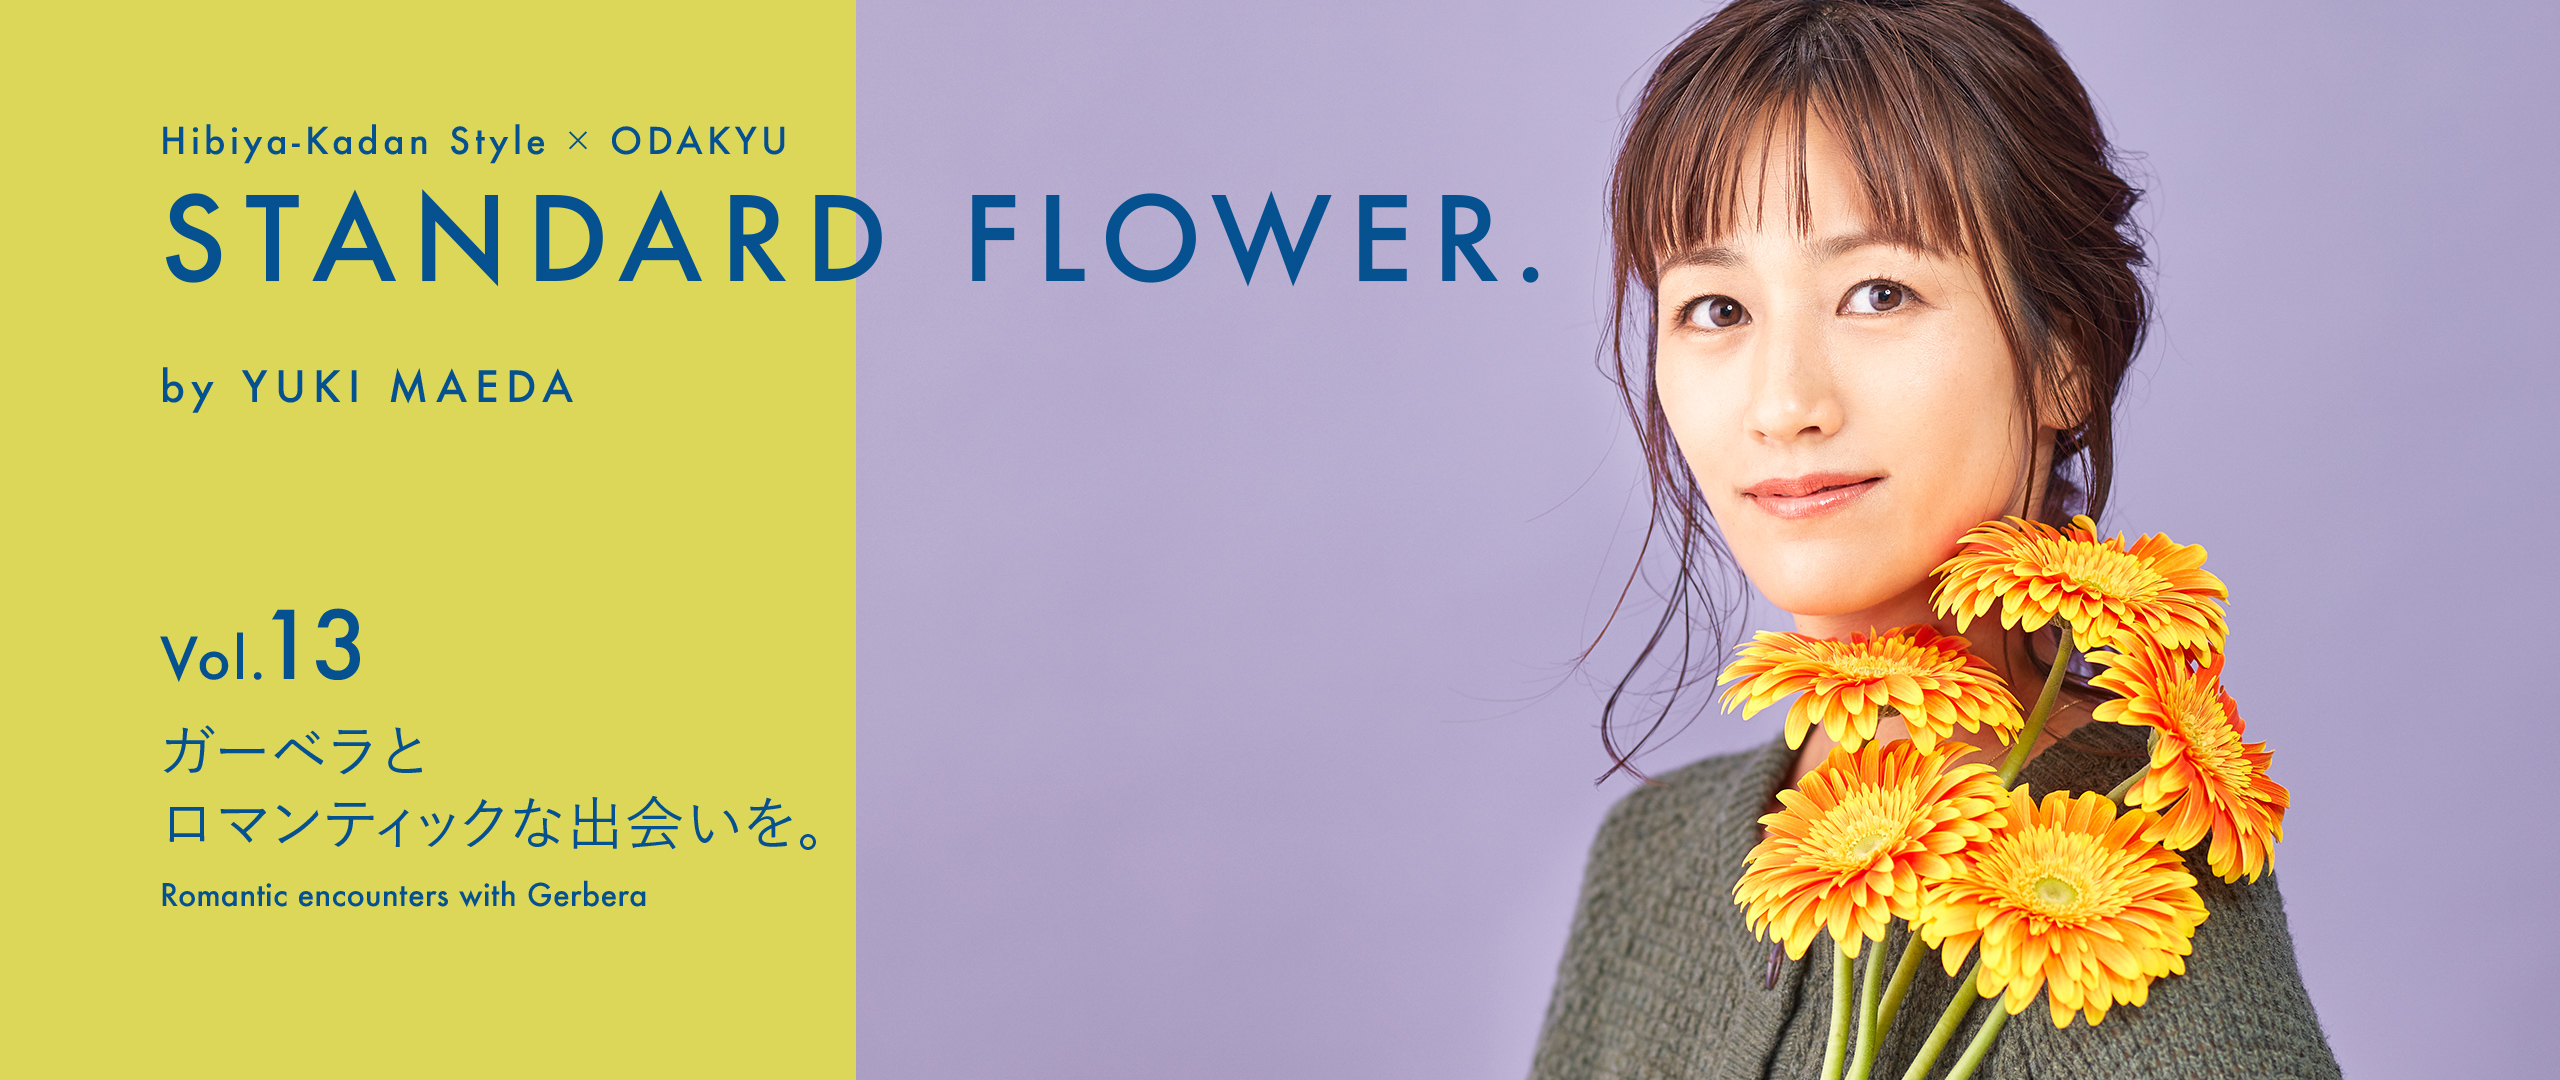 Standard Flower Vol 13 ガーベラとロマンティックな出会いを 小田急ポイントカード Opカード